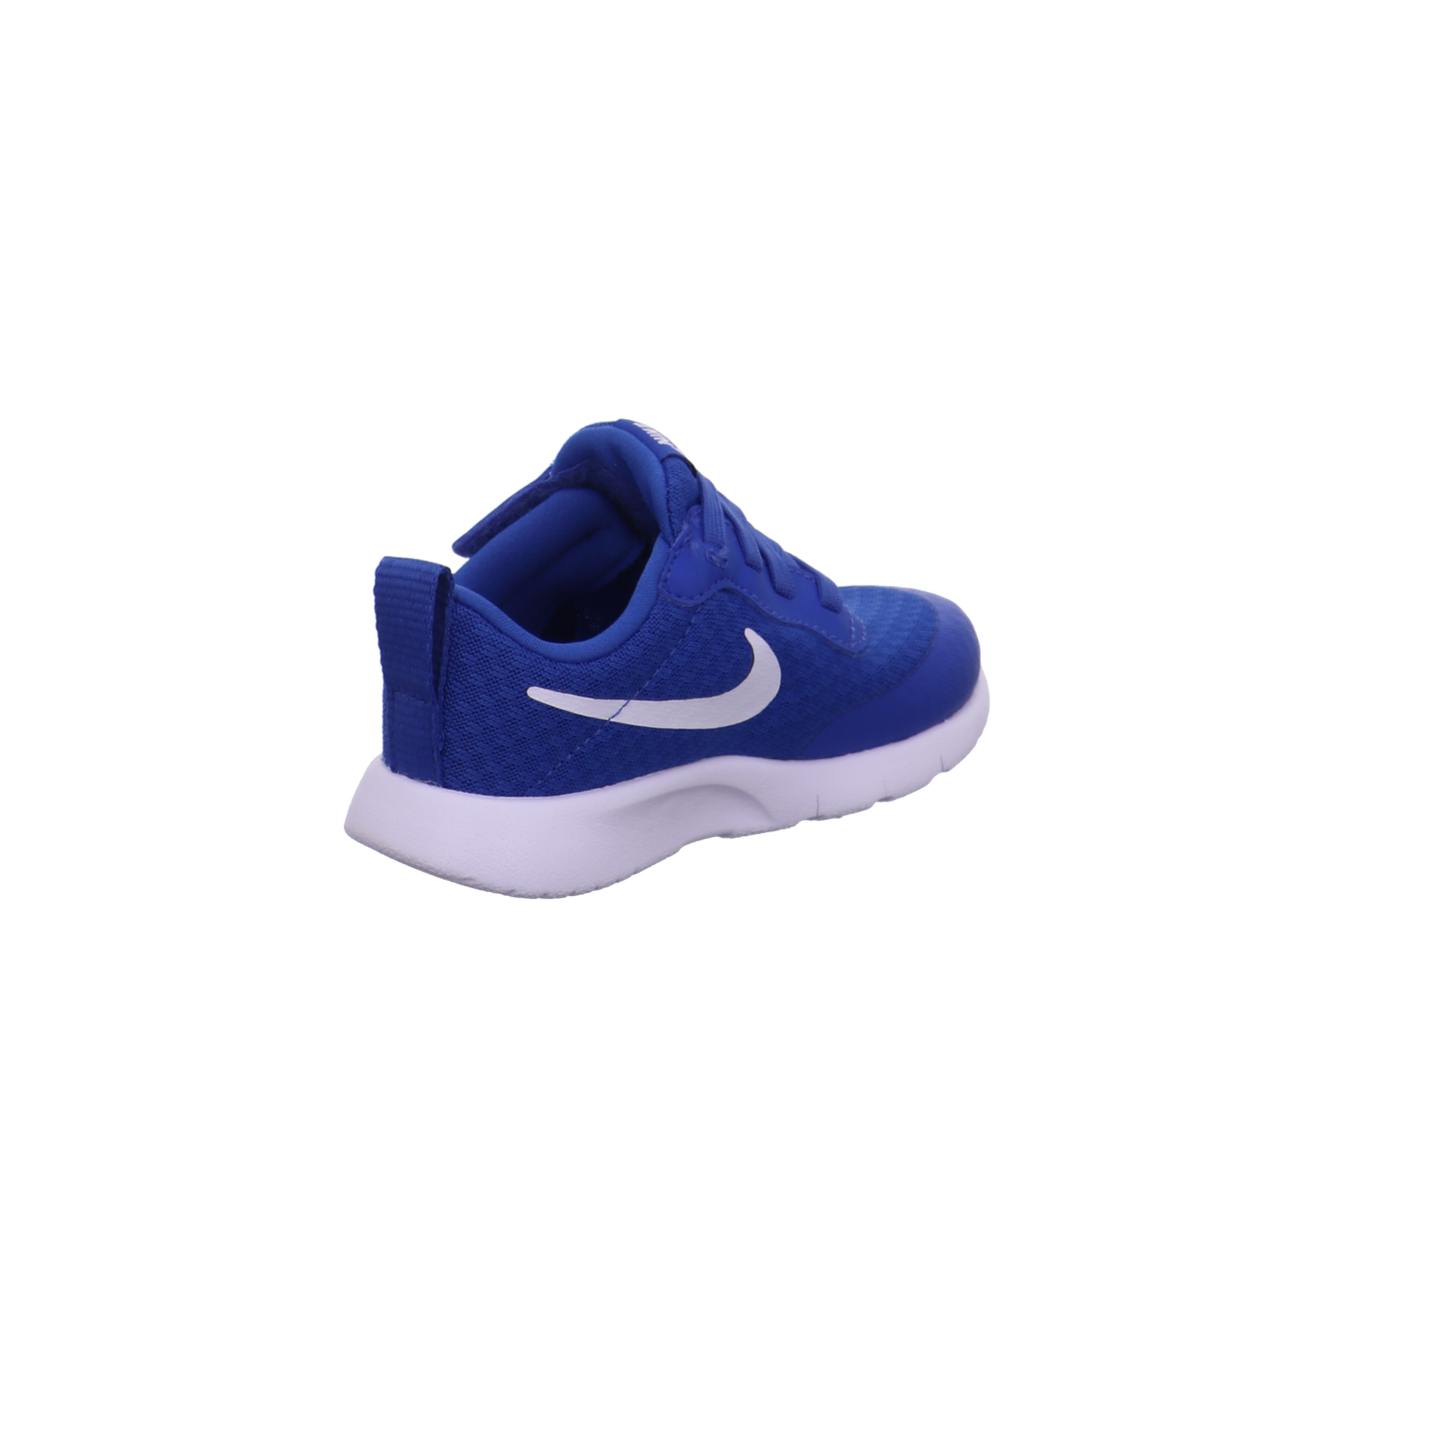 Nike Krabbel- und Lauflernschuhe blau kombi Bild5